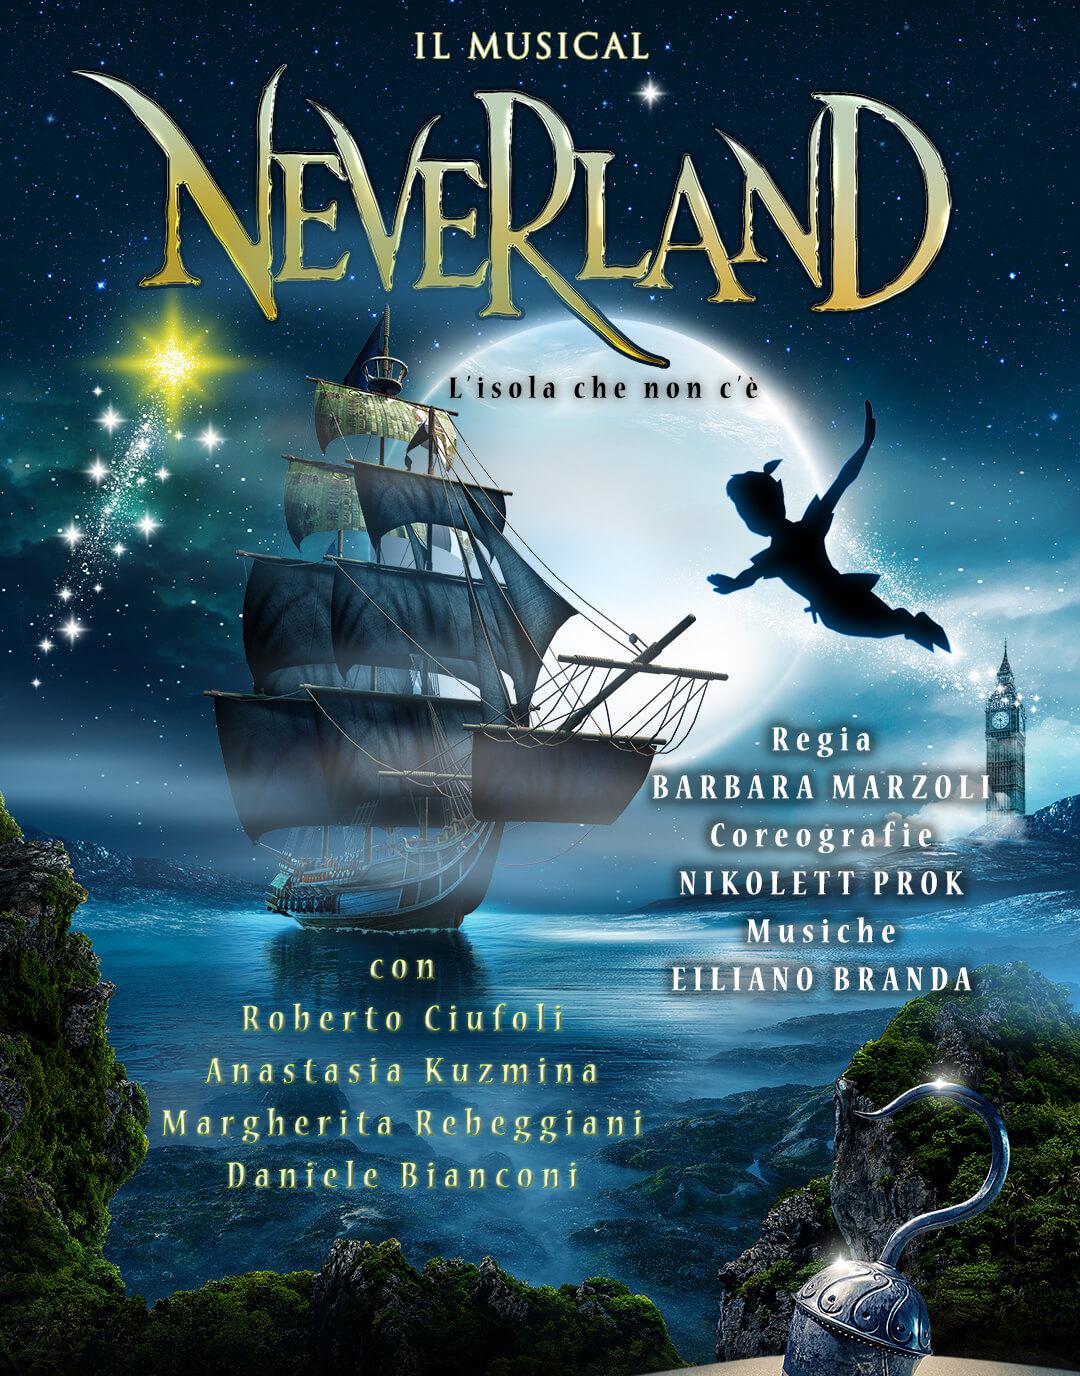 Neverland - Teatro Alfieri Torino